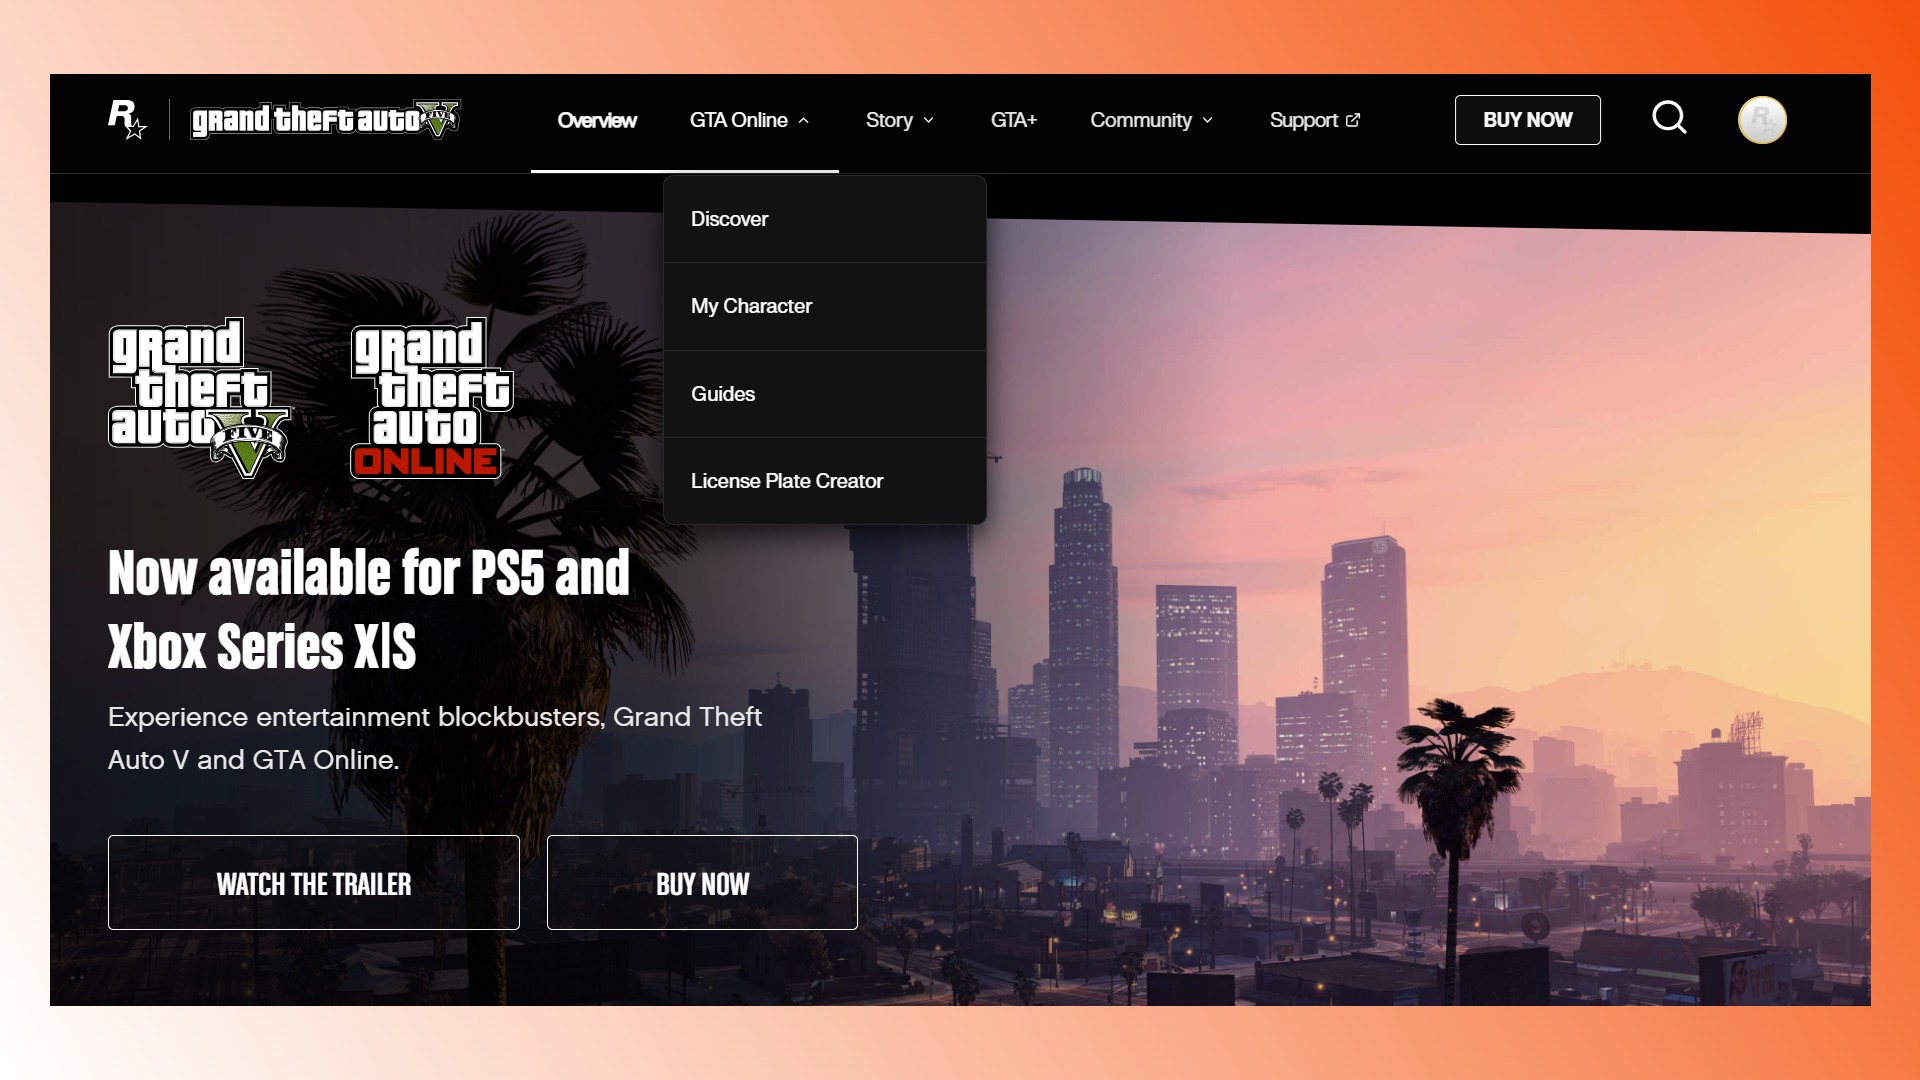 Rockstar working on GTAV Social Club, companion app issues - GameSpot